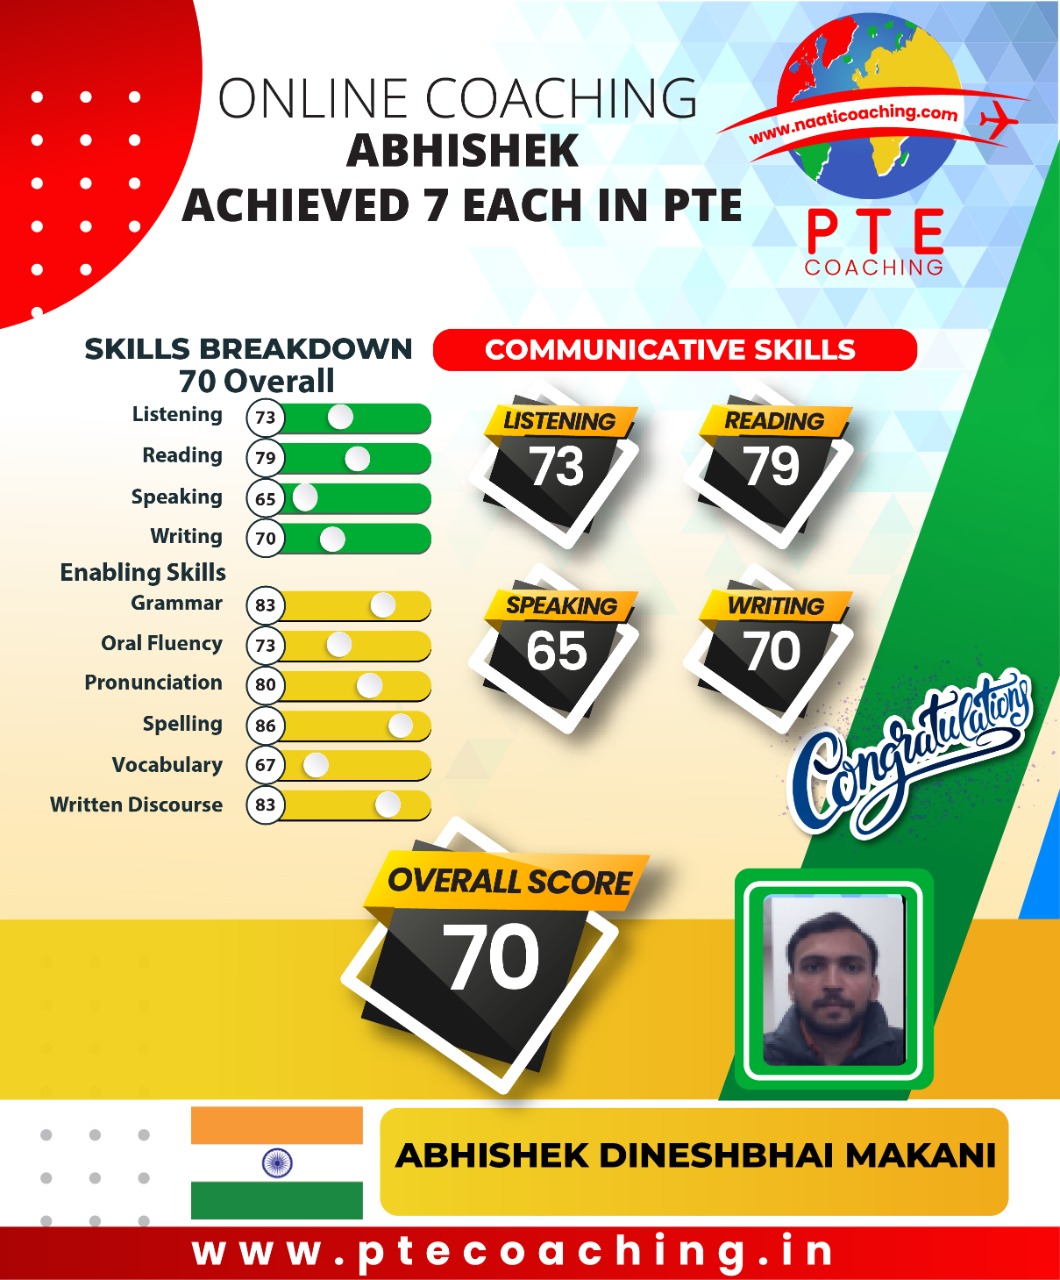 PTE Coaching Scorecard - Abhishek achieved 7 each in PTE